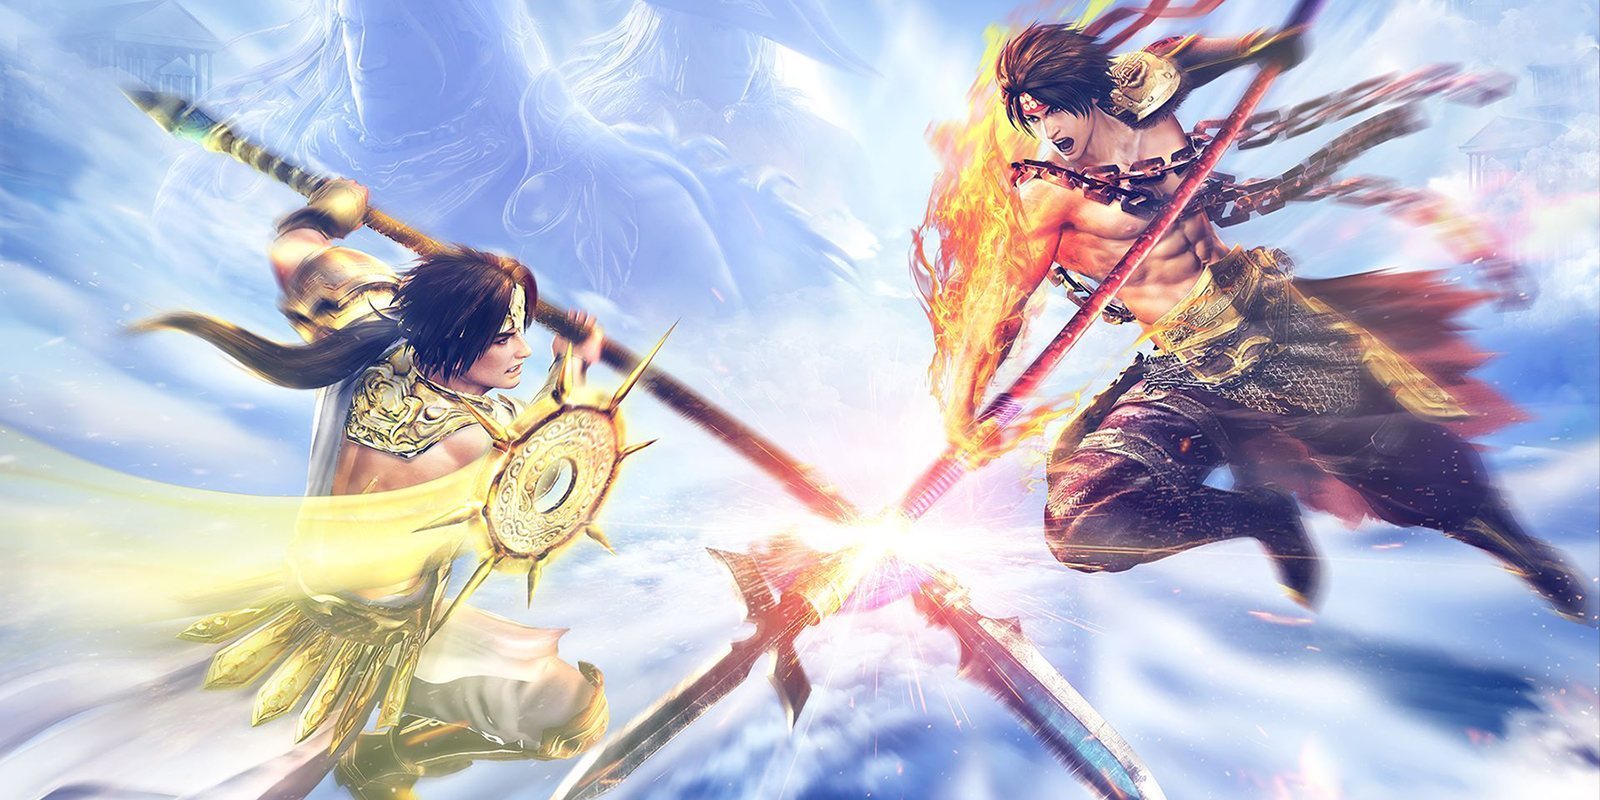 Análisis de 'Warriors Orochi 4' para PS4, apostando por lo clásico